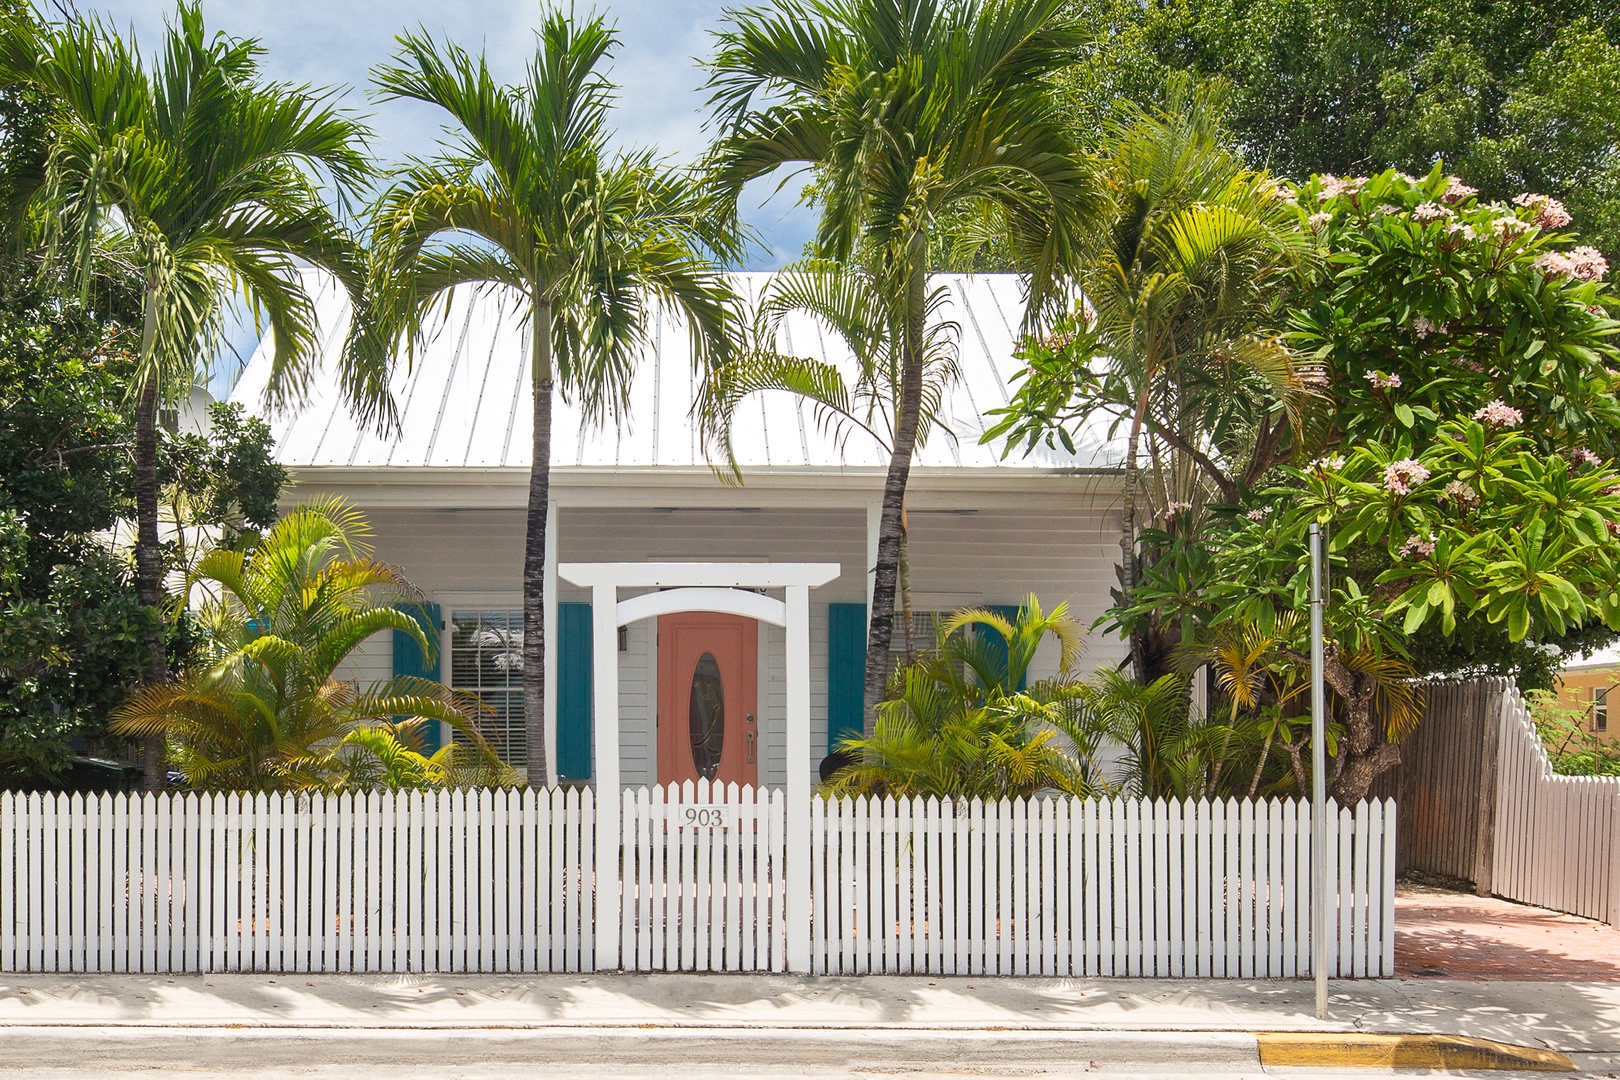 Bahama Dreams Key West Private Entrance